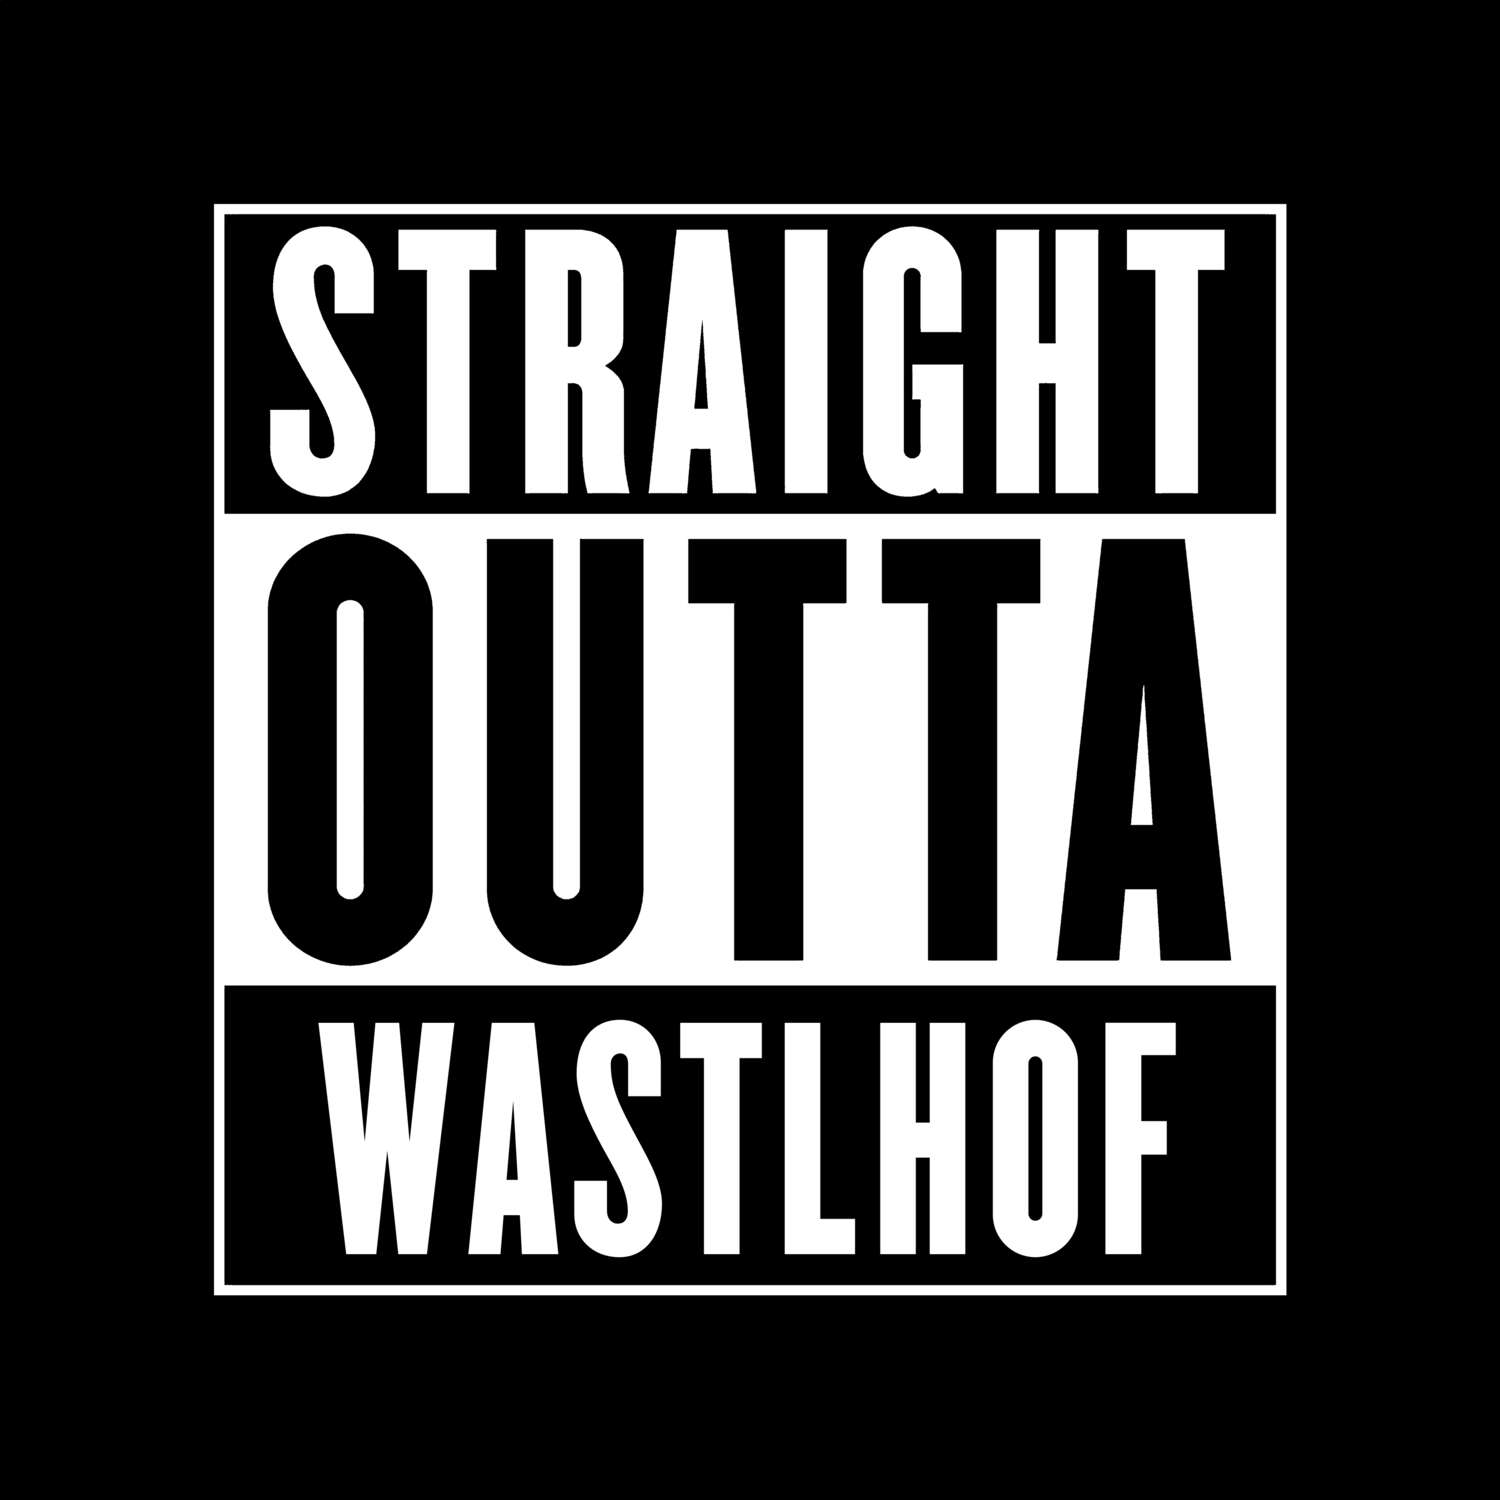 Wastlhof T-Shirt »Straight Outta«